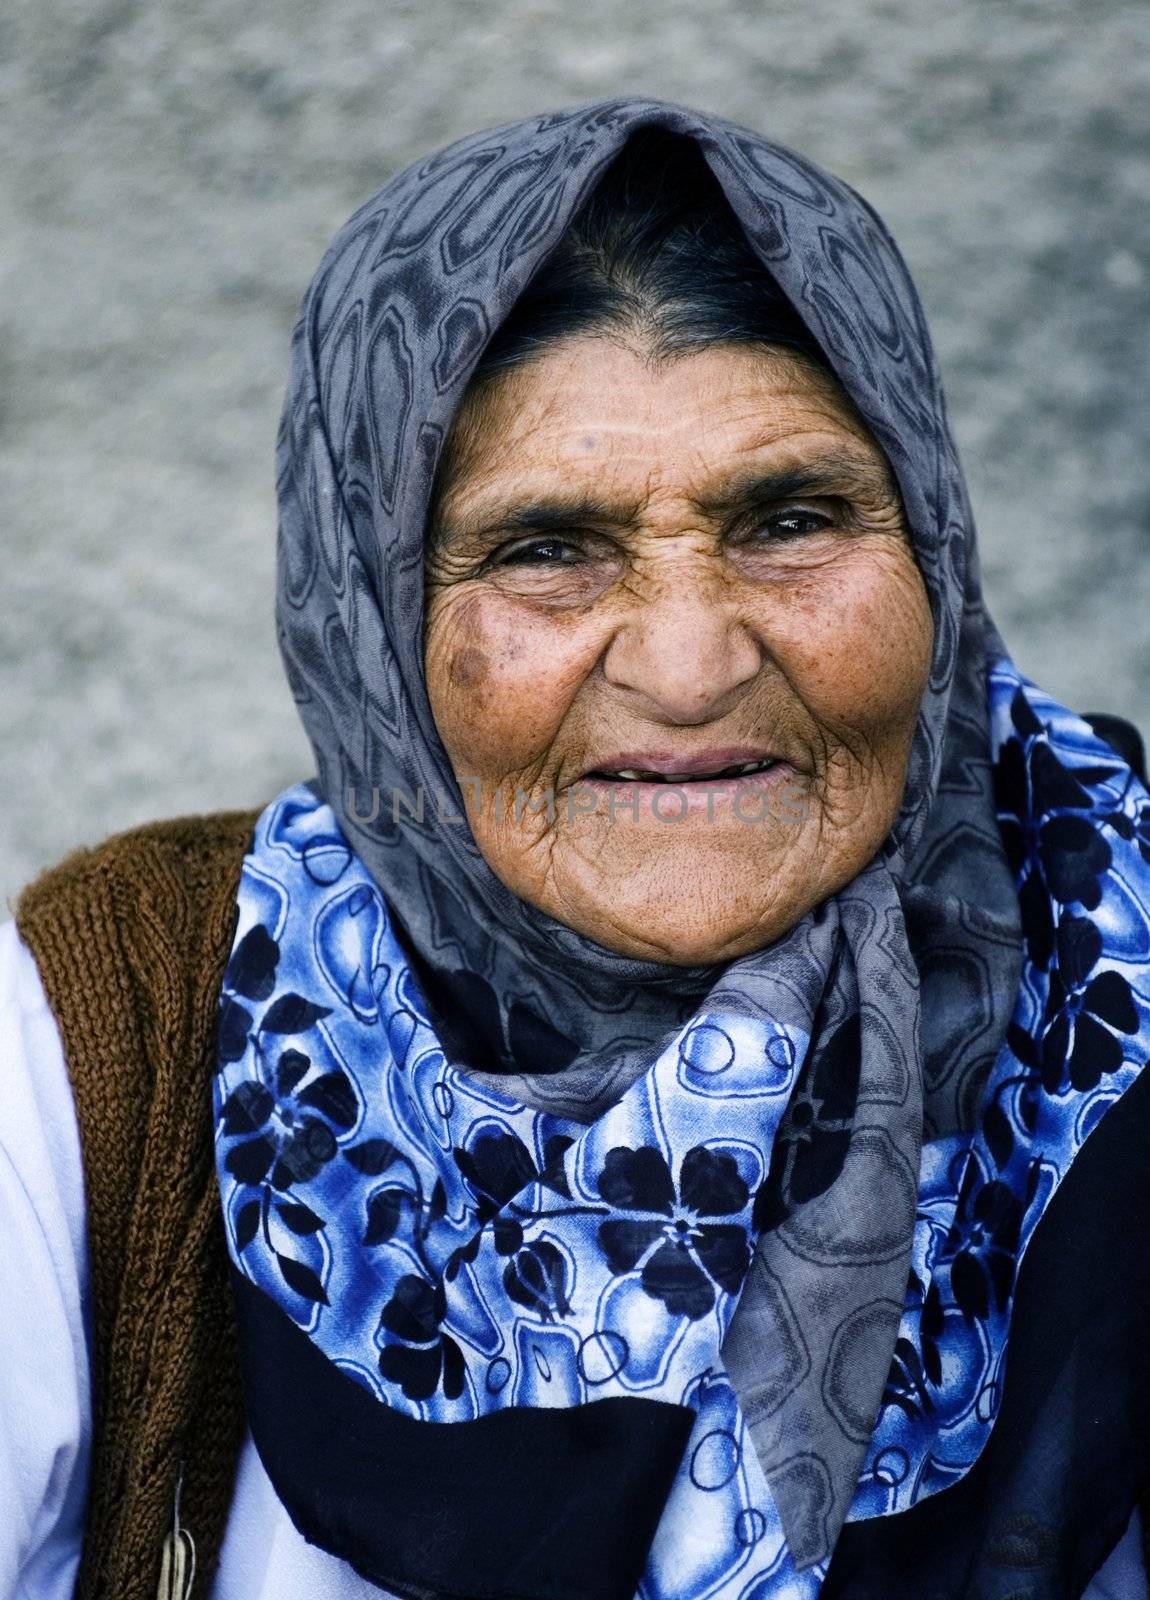 Old woman by kobby_dagan